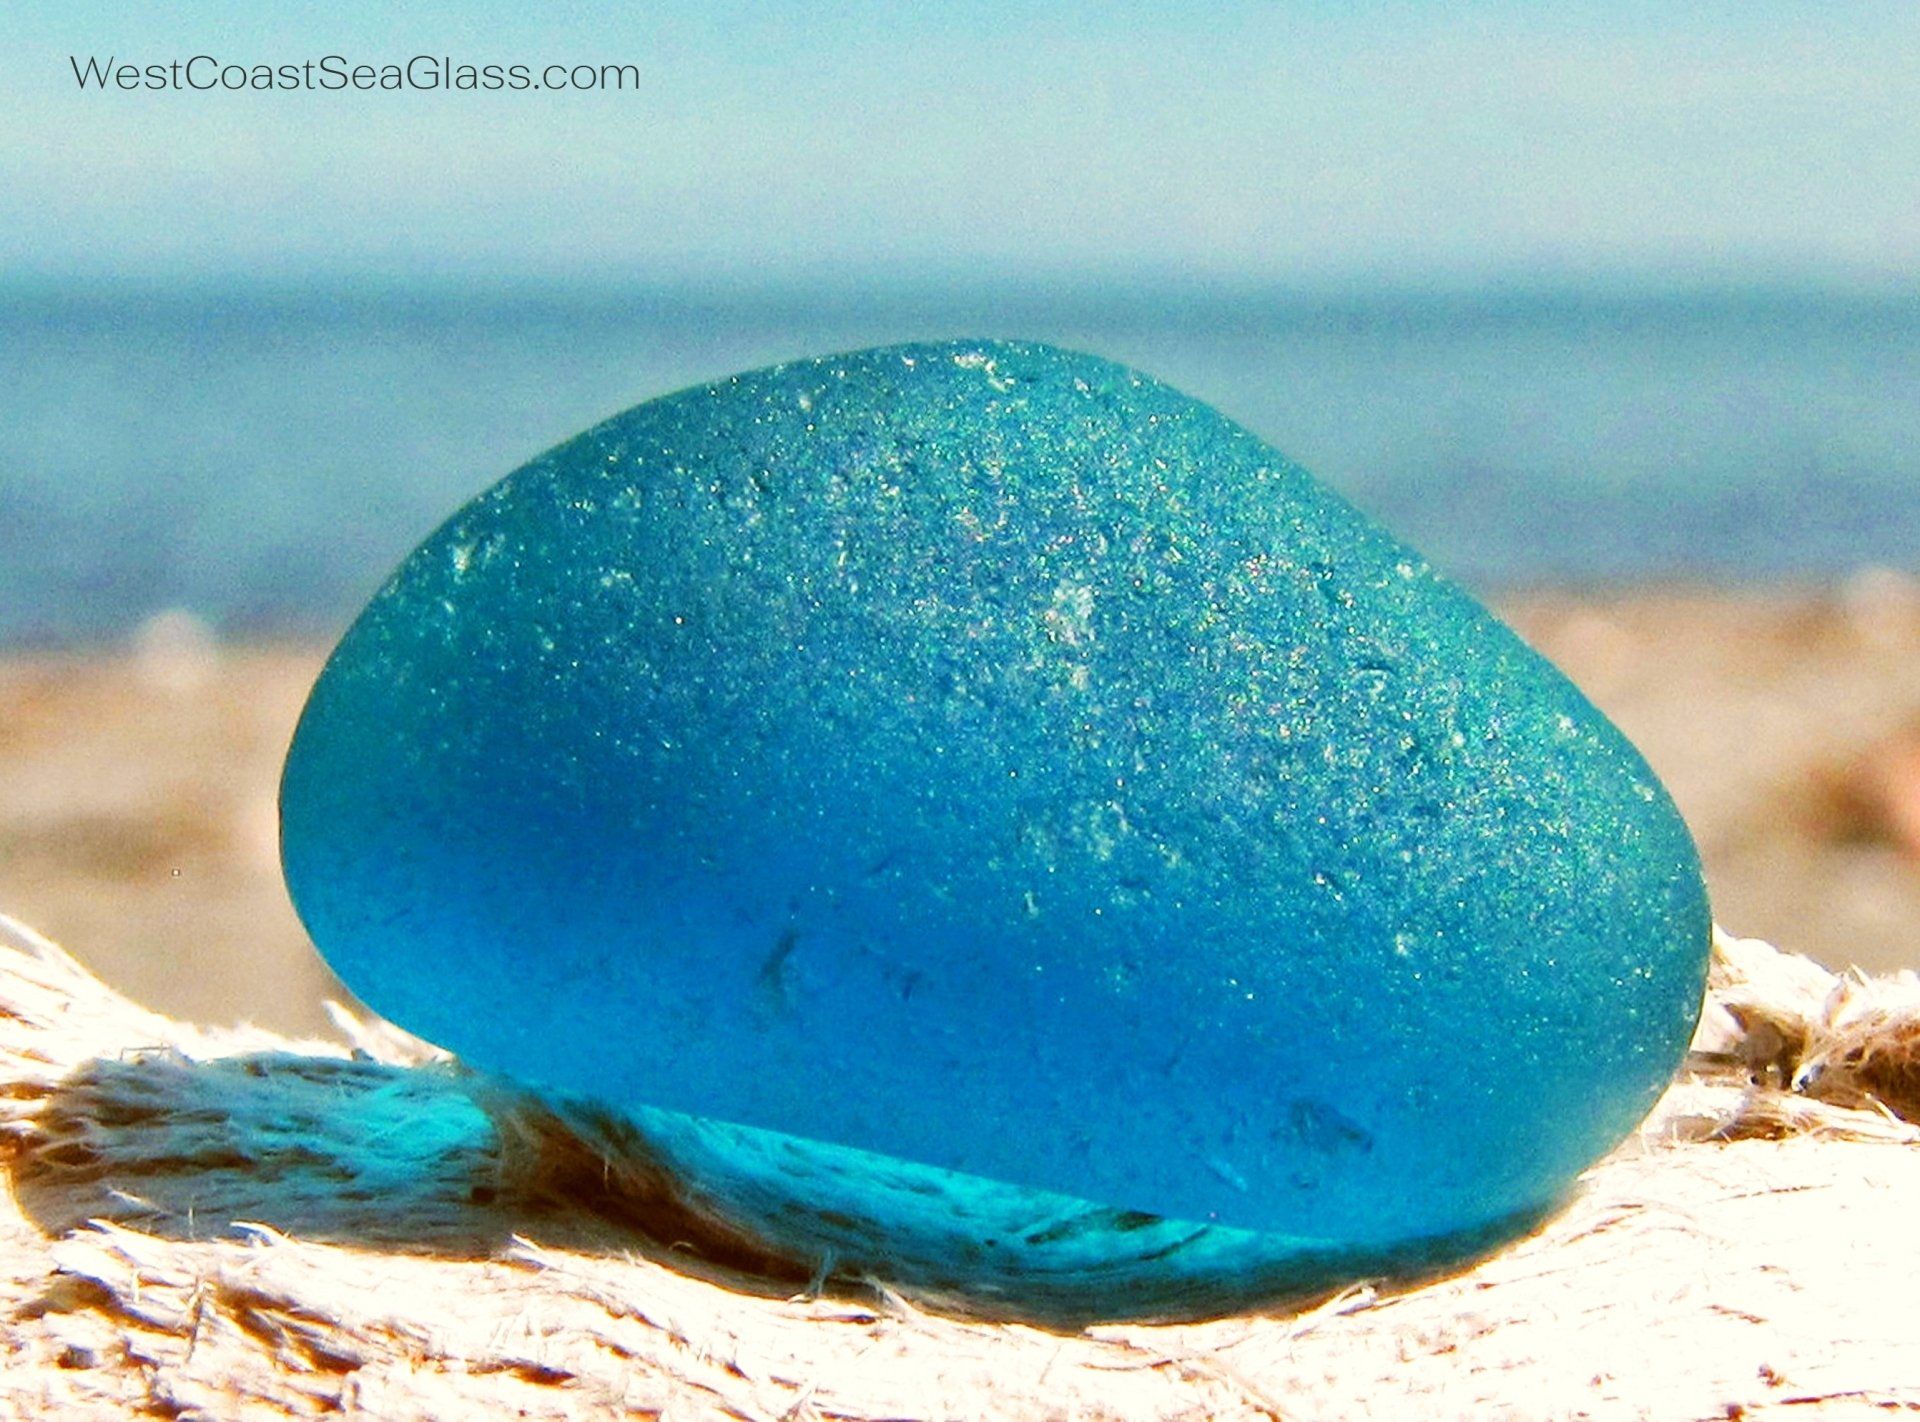 Rare, Pacific turquoise sea glass!